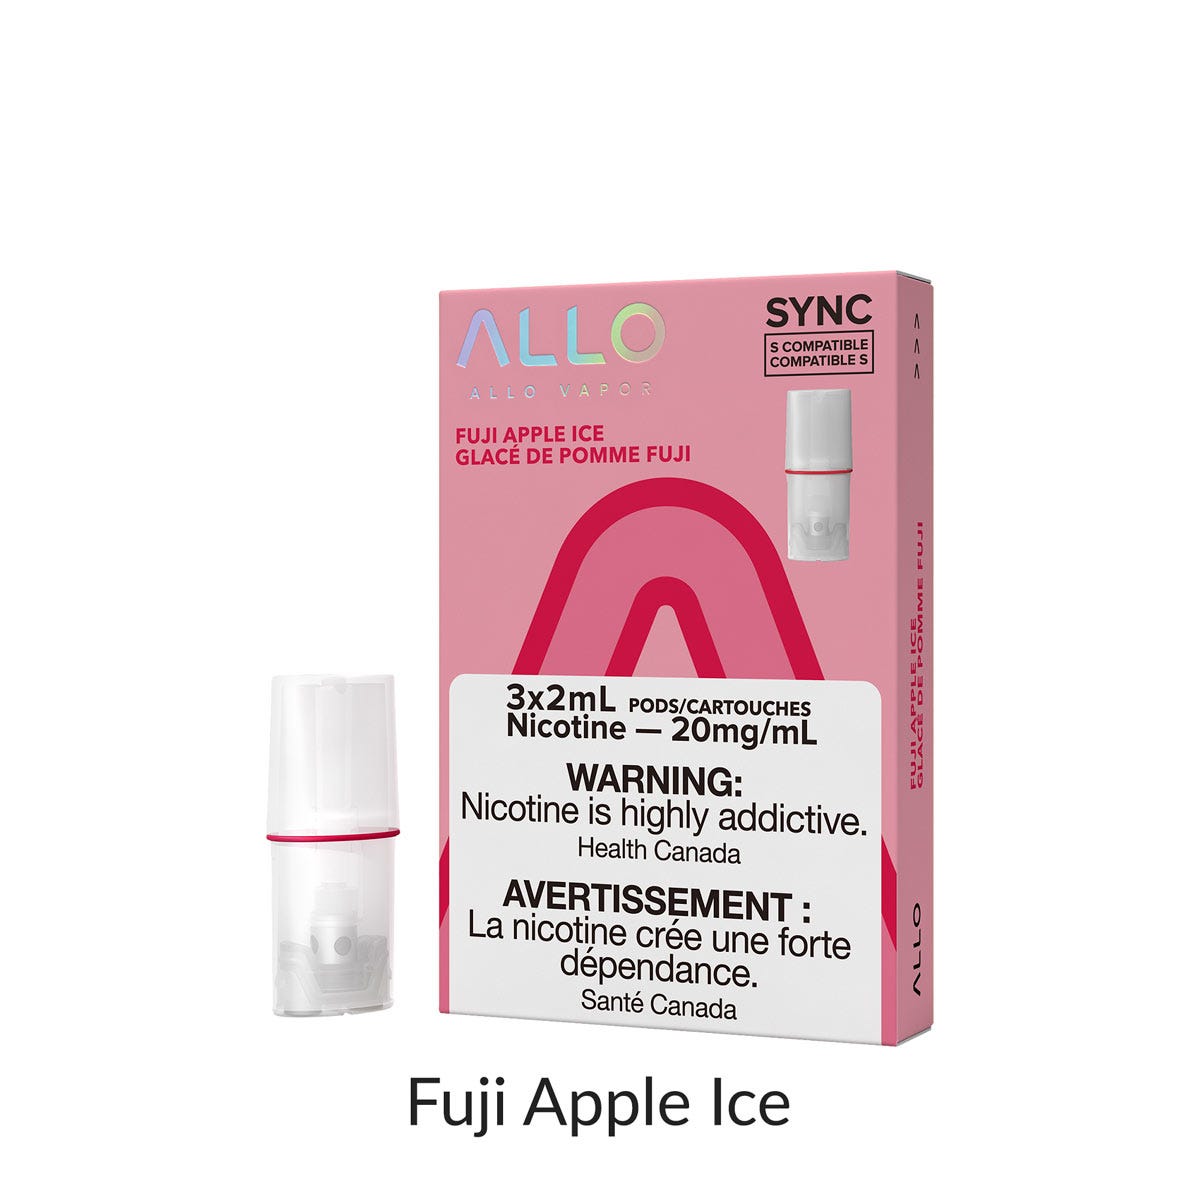 Fuji Apple Ice Allo Sync Pod Alliston Newmarket Woodbridge Vaughan GTA Toronto Ontario Canada